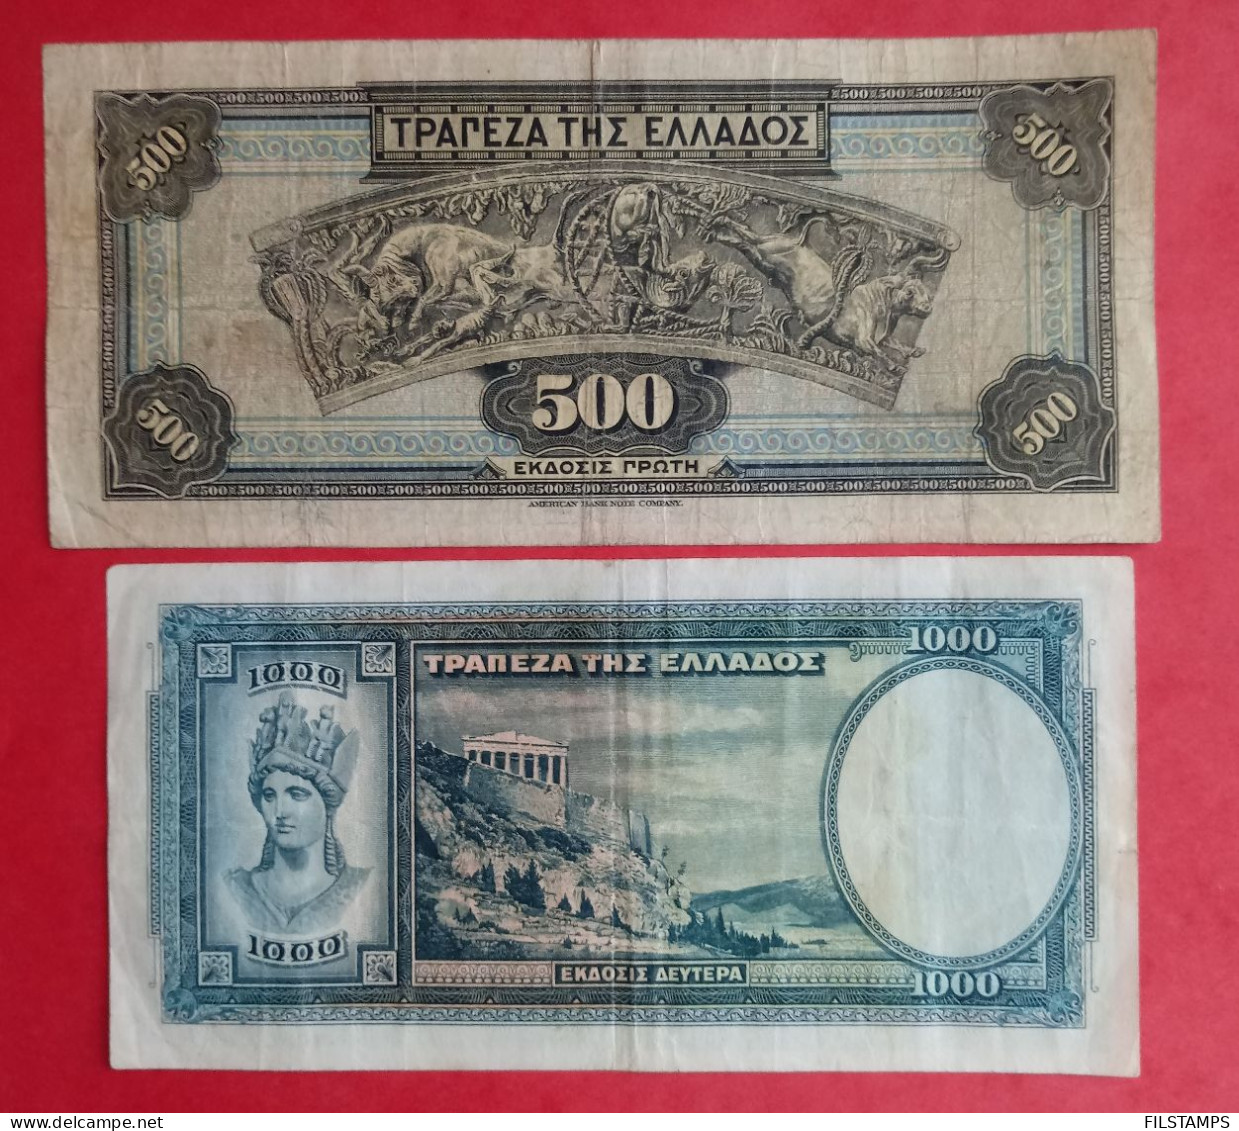 GREECE 500 DRACMAI 1932, 1000 DRACMAI 1939. BANKNOTES. BILLETES GRECIA. - Grèce